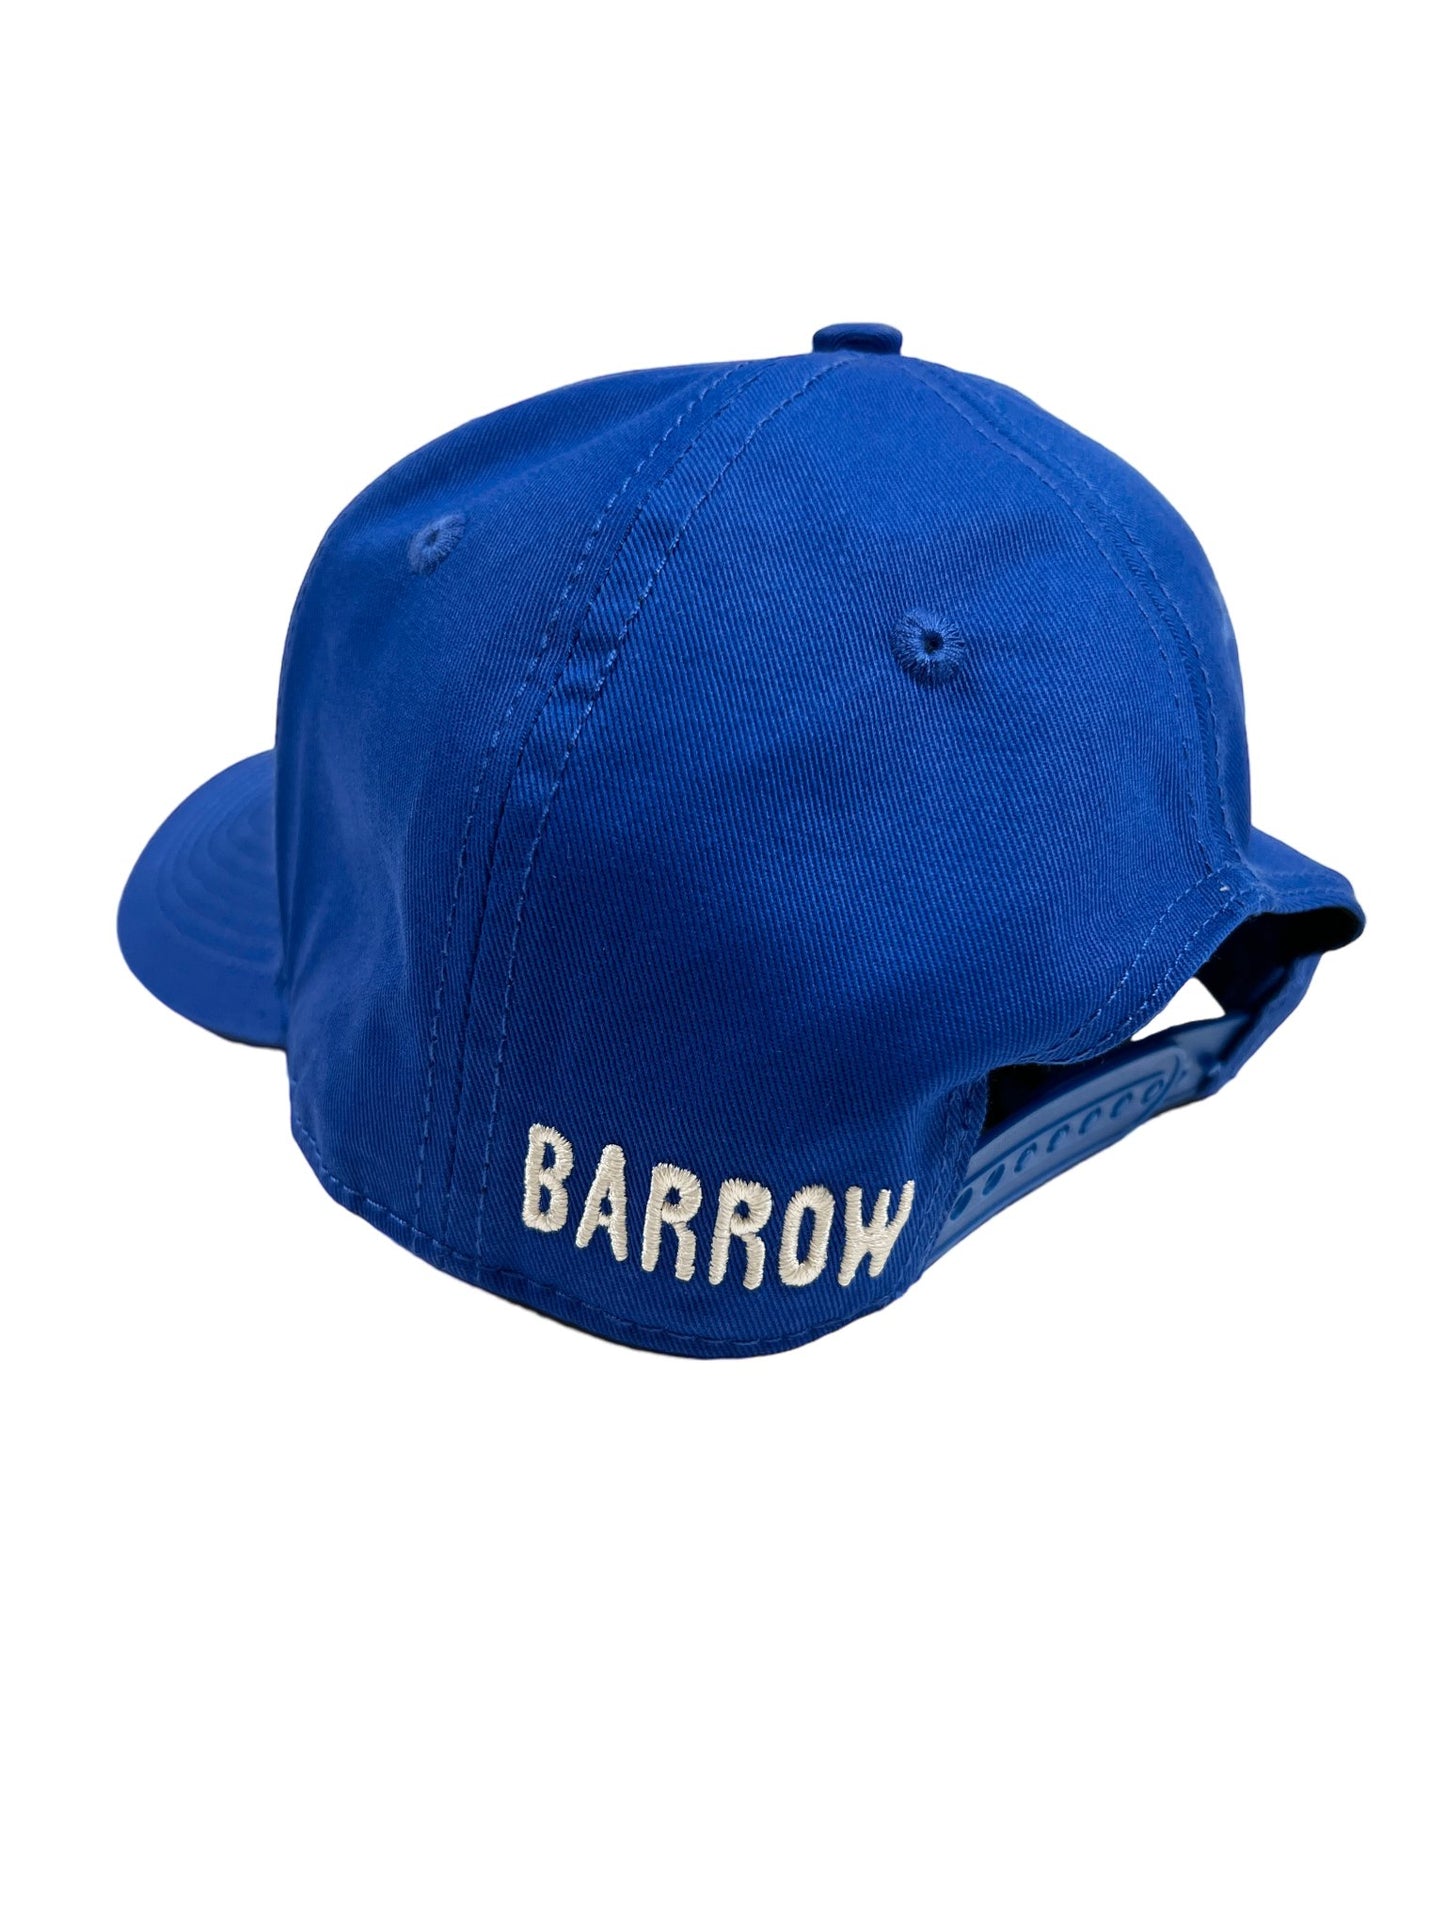 Probus BARROW F3BWUABC108 BASEBALL HAT DAZZLING BLUE O/S